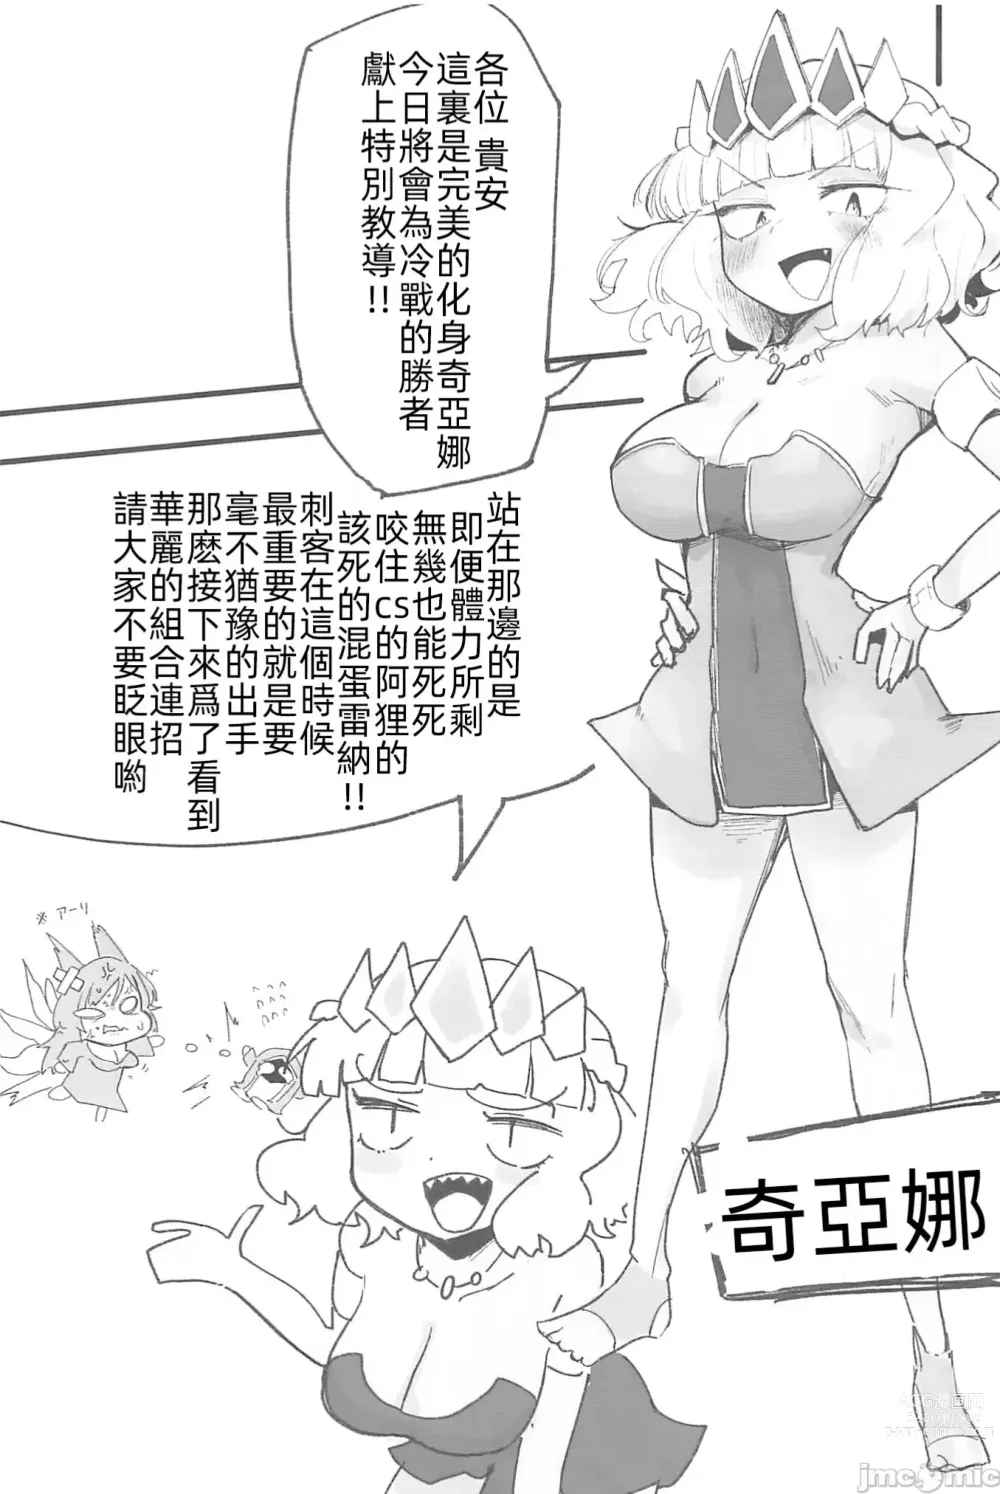 Page 2 of manga crosmcx12.13